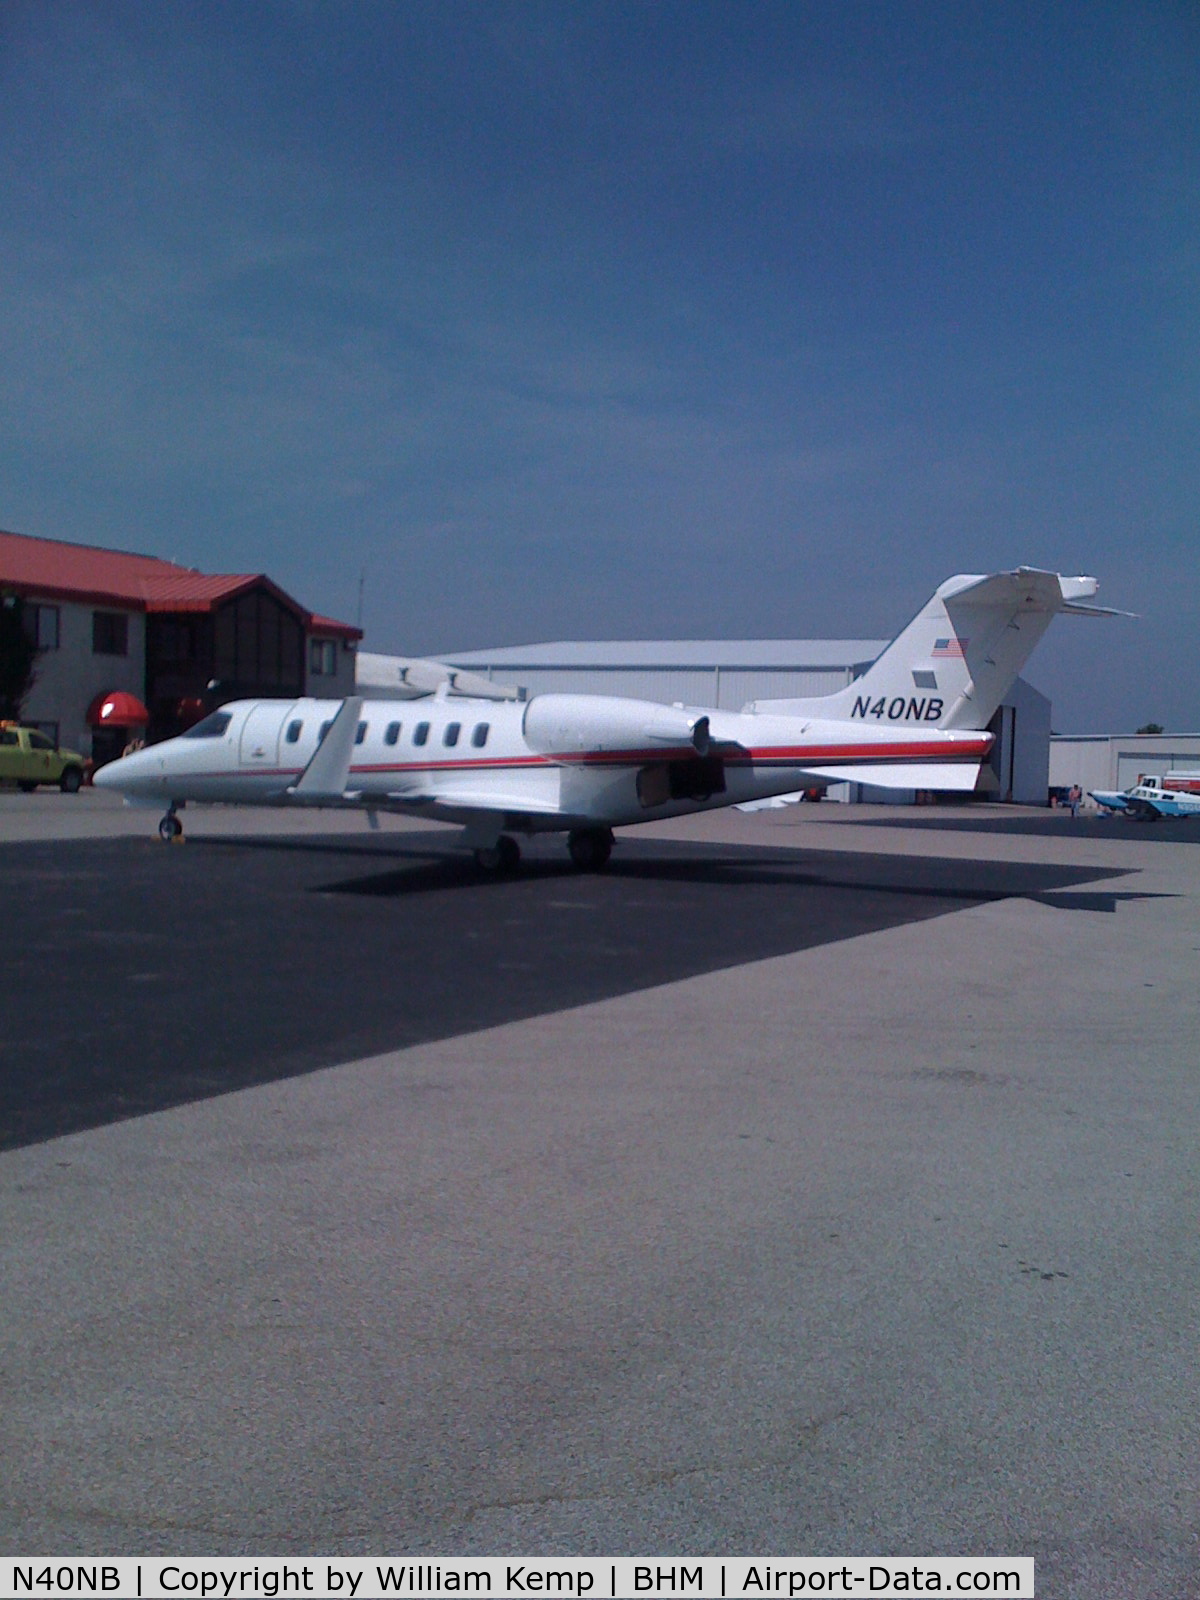 N40NB, 2007 Learjet Inc 45 C/N 2087, Aircraft at homebase